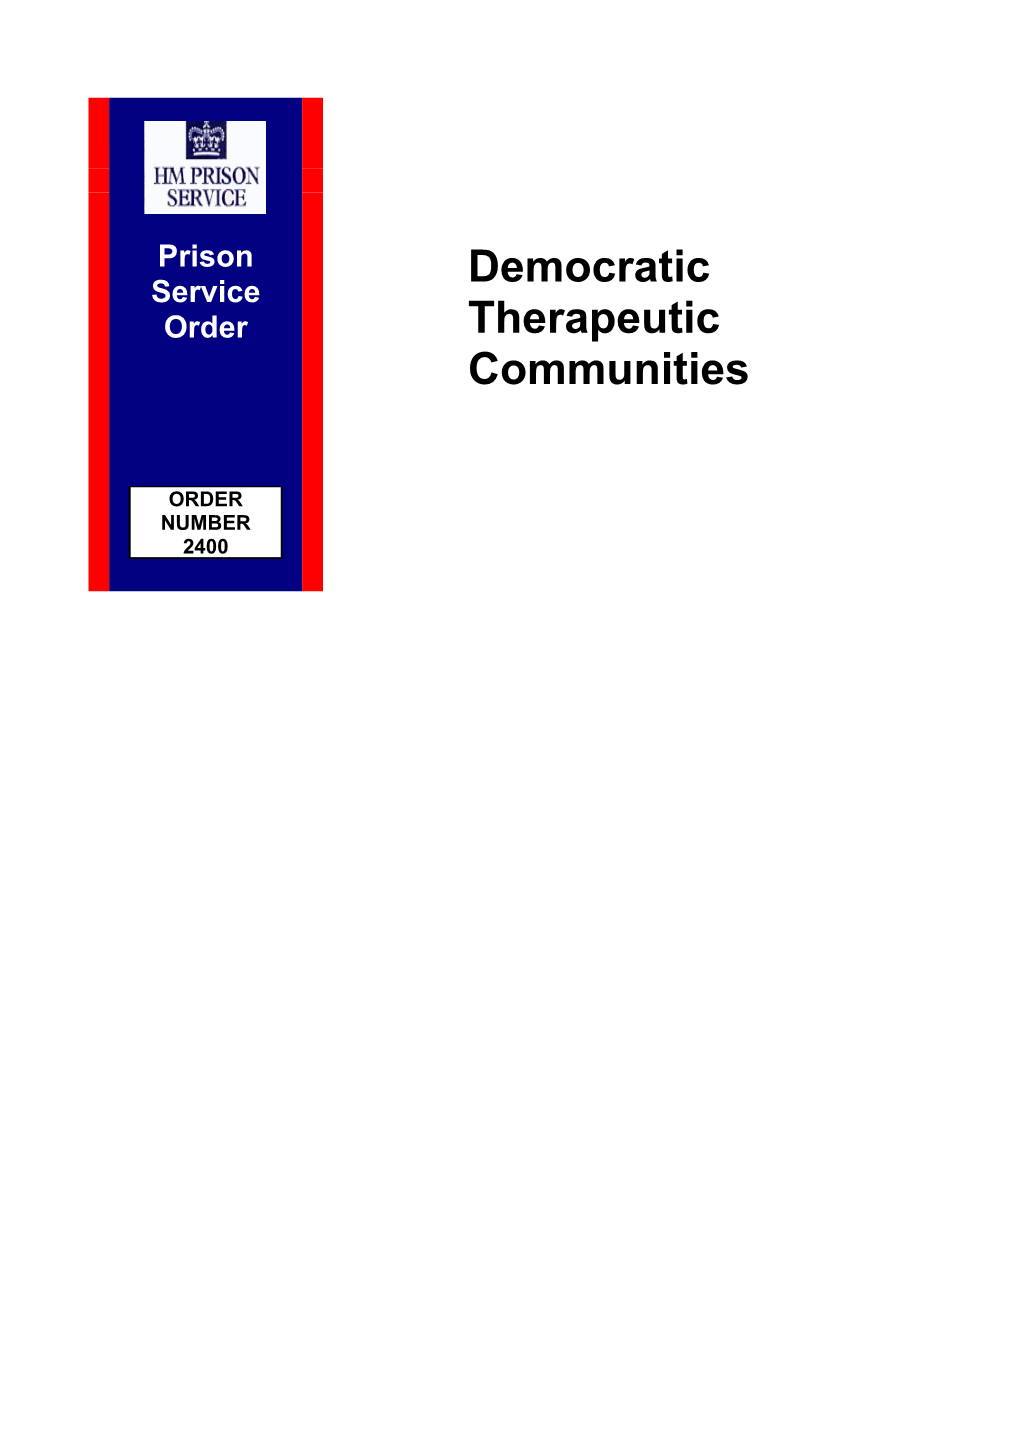 Draft PSO on (Democratic) Therapeutic Communities